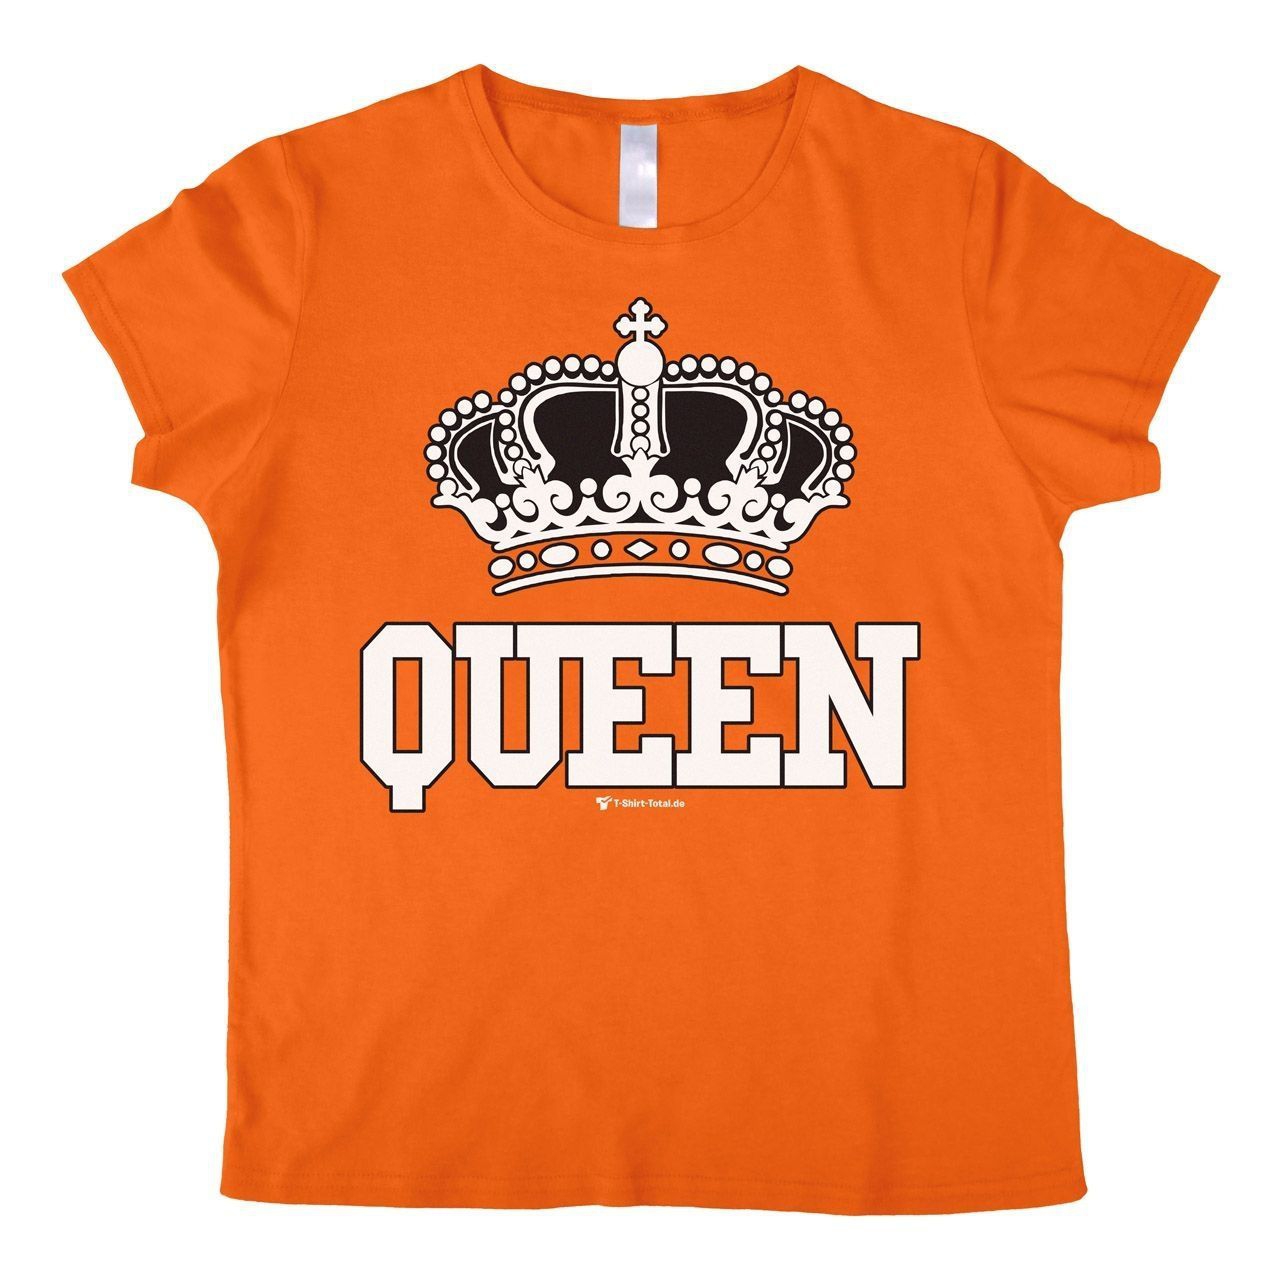 Queen Woman T-Shirt orange Medium